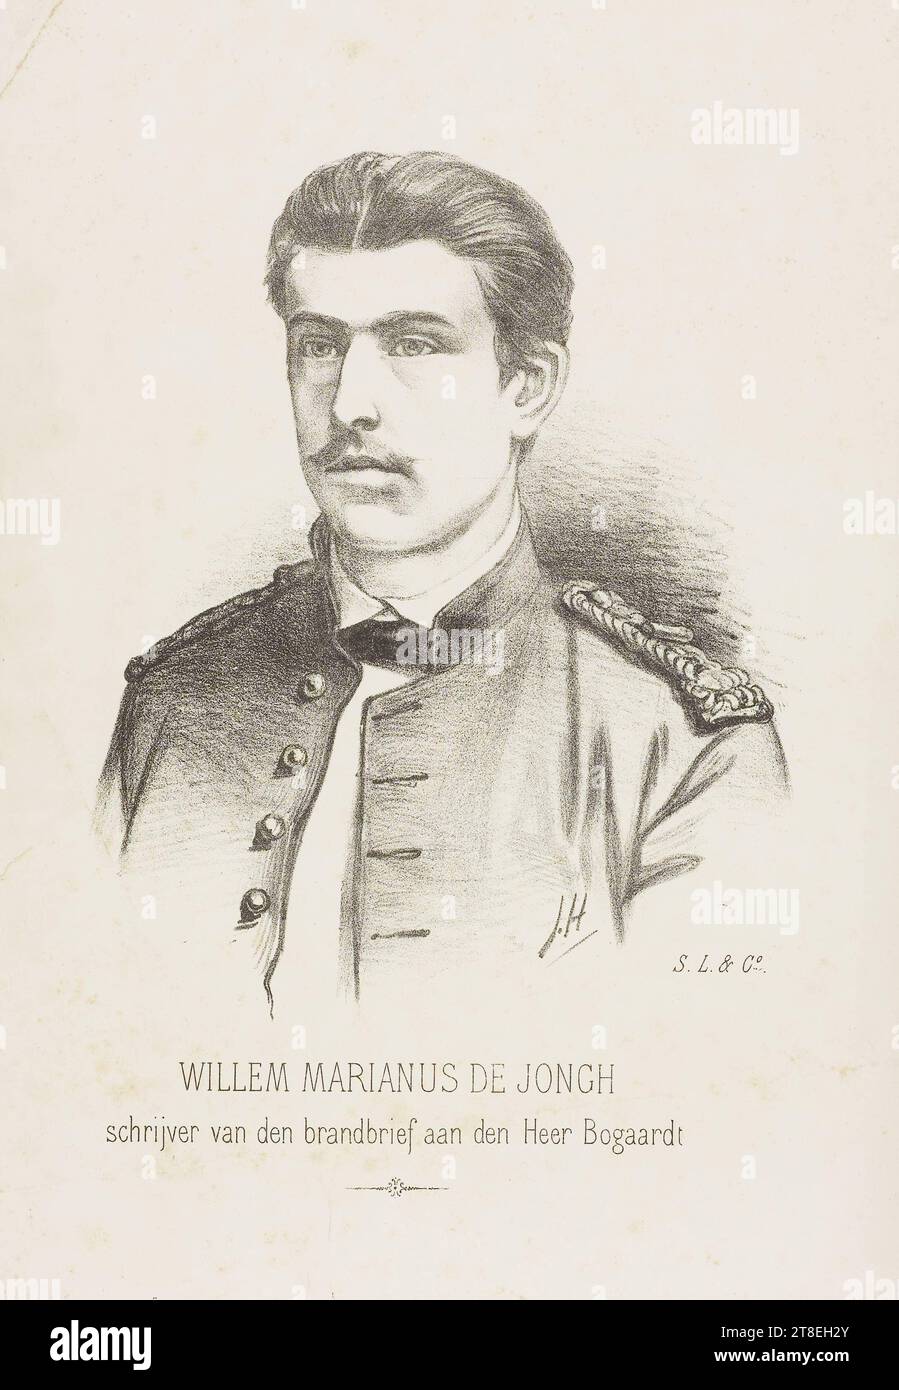 J.H. monogram. S.L. & C°. monogram. WILLEM MARIANUS DE JONGH writer of the fire letter to Mr. Bogaardt Stock Photo